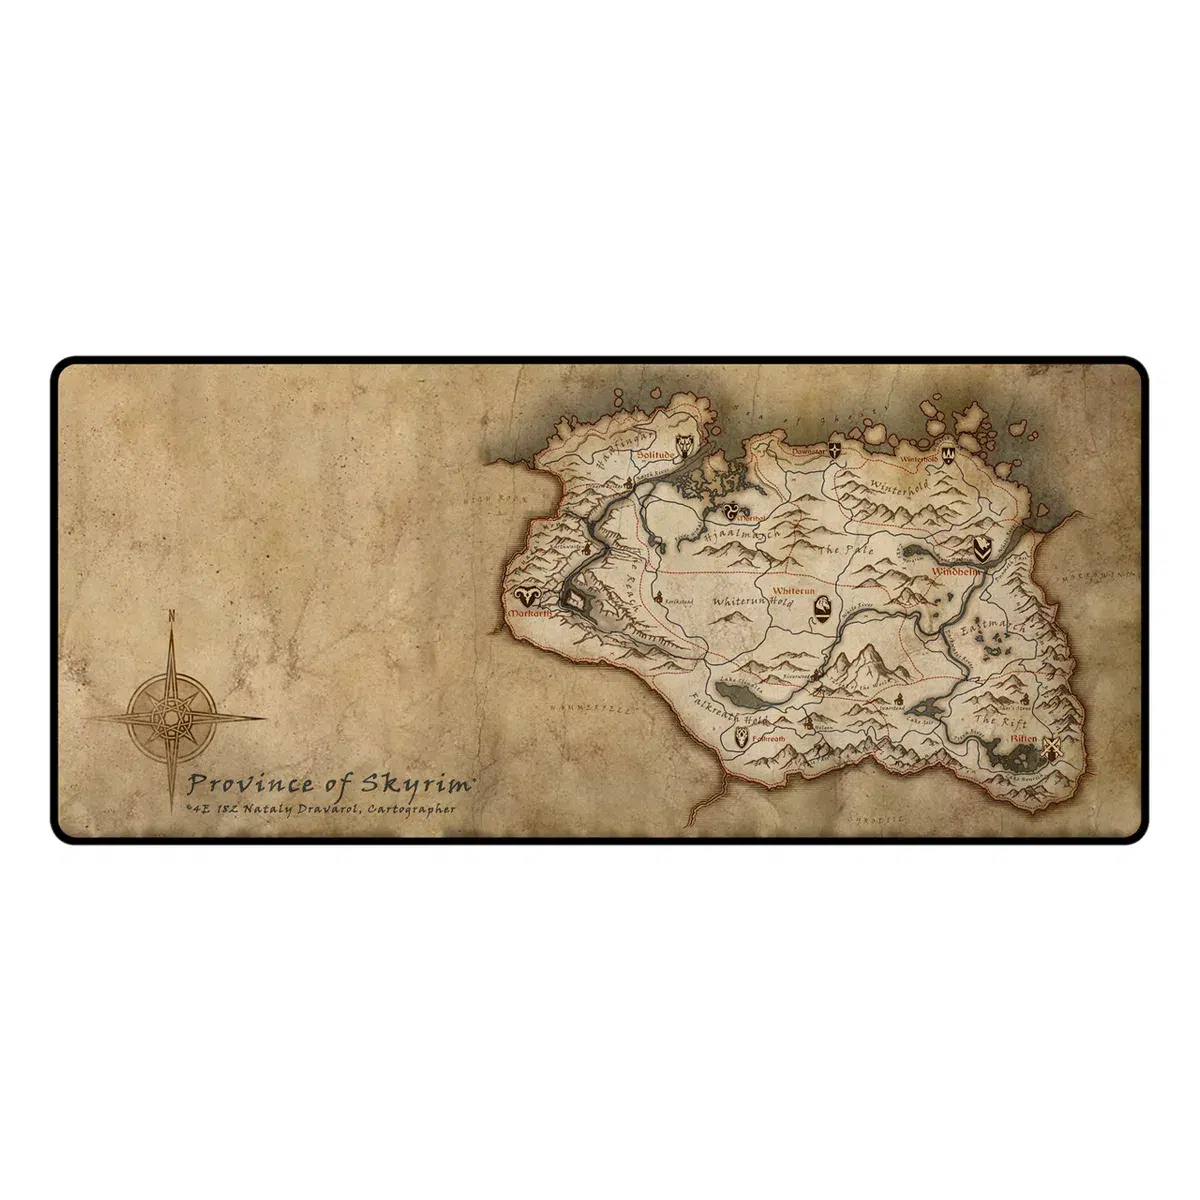 The Elder Scrolls V: Skyrim Mousepad "Province of Skyrim"